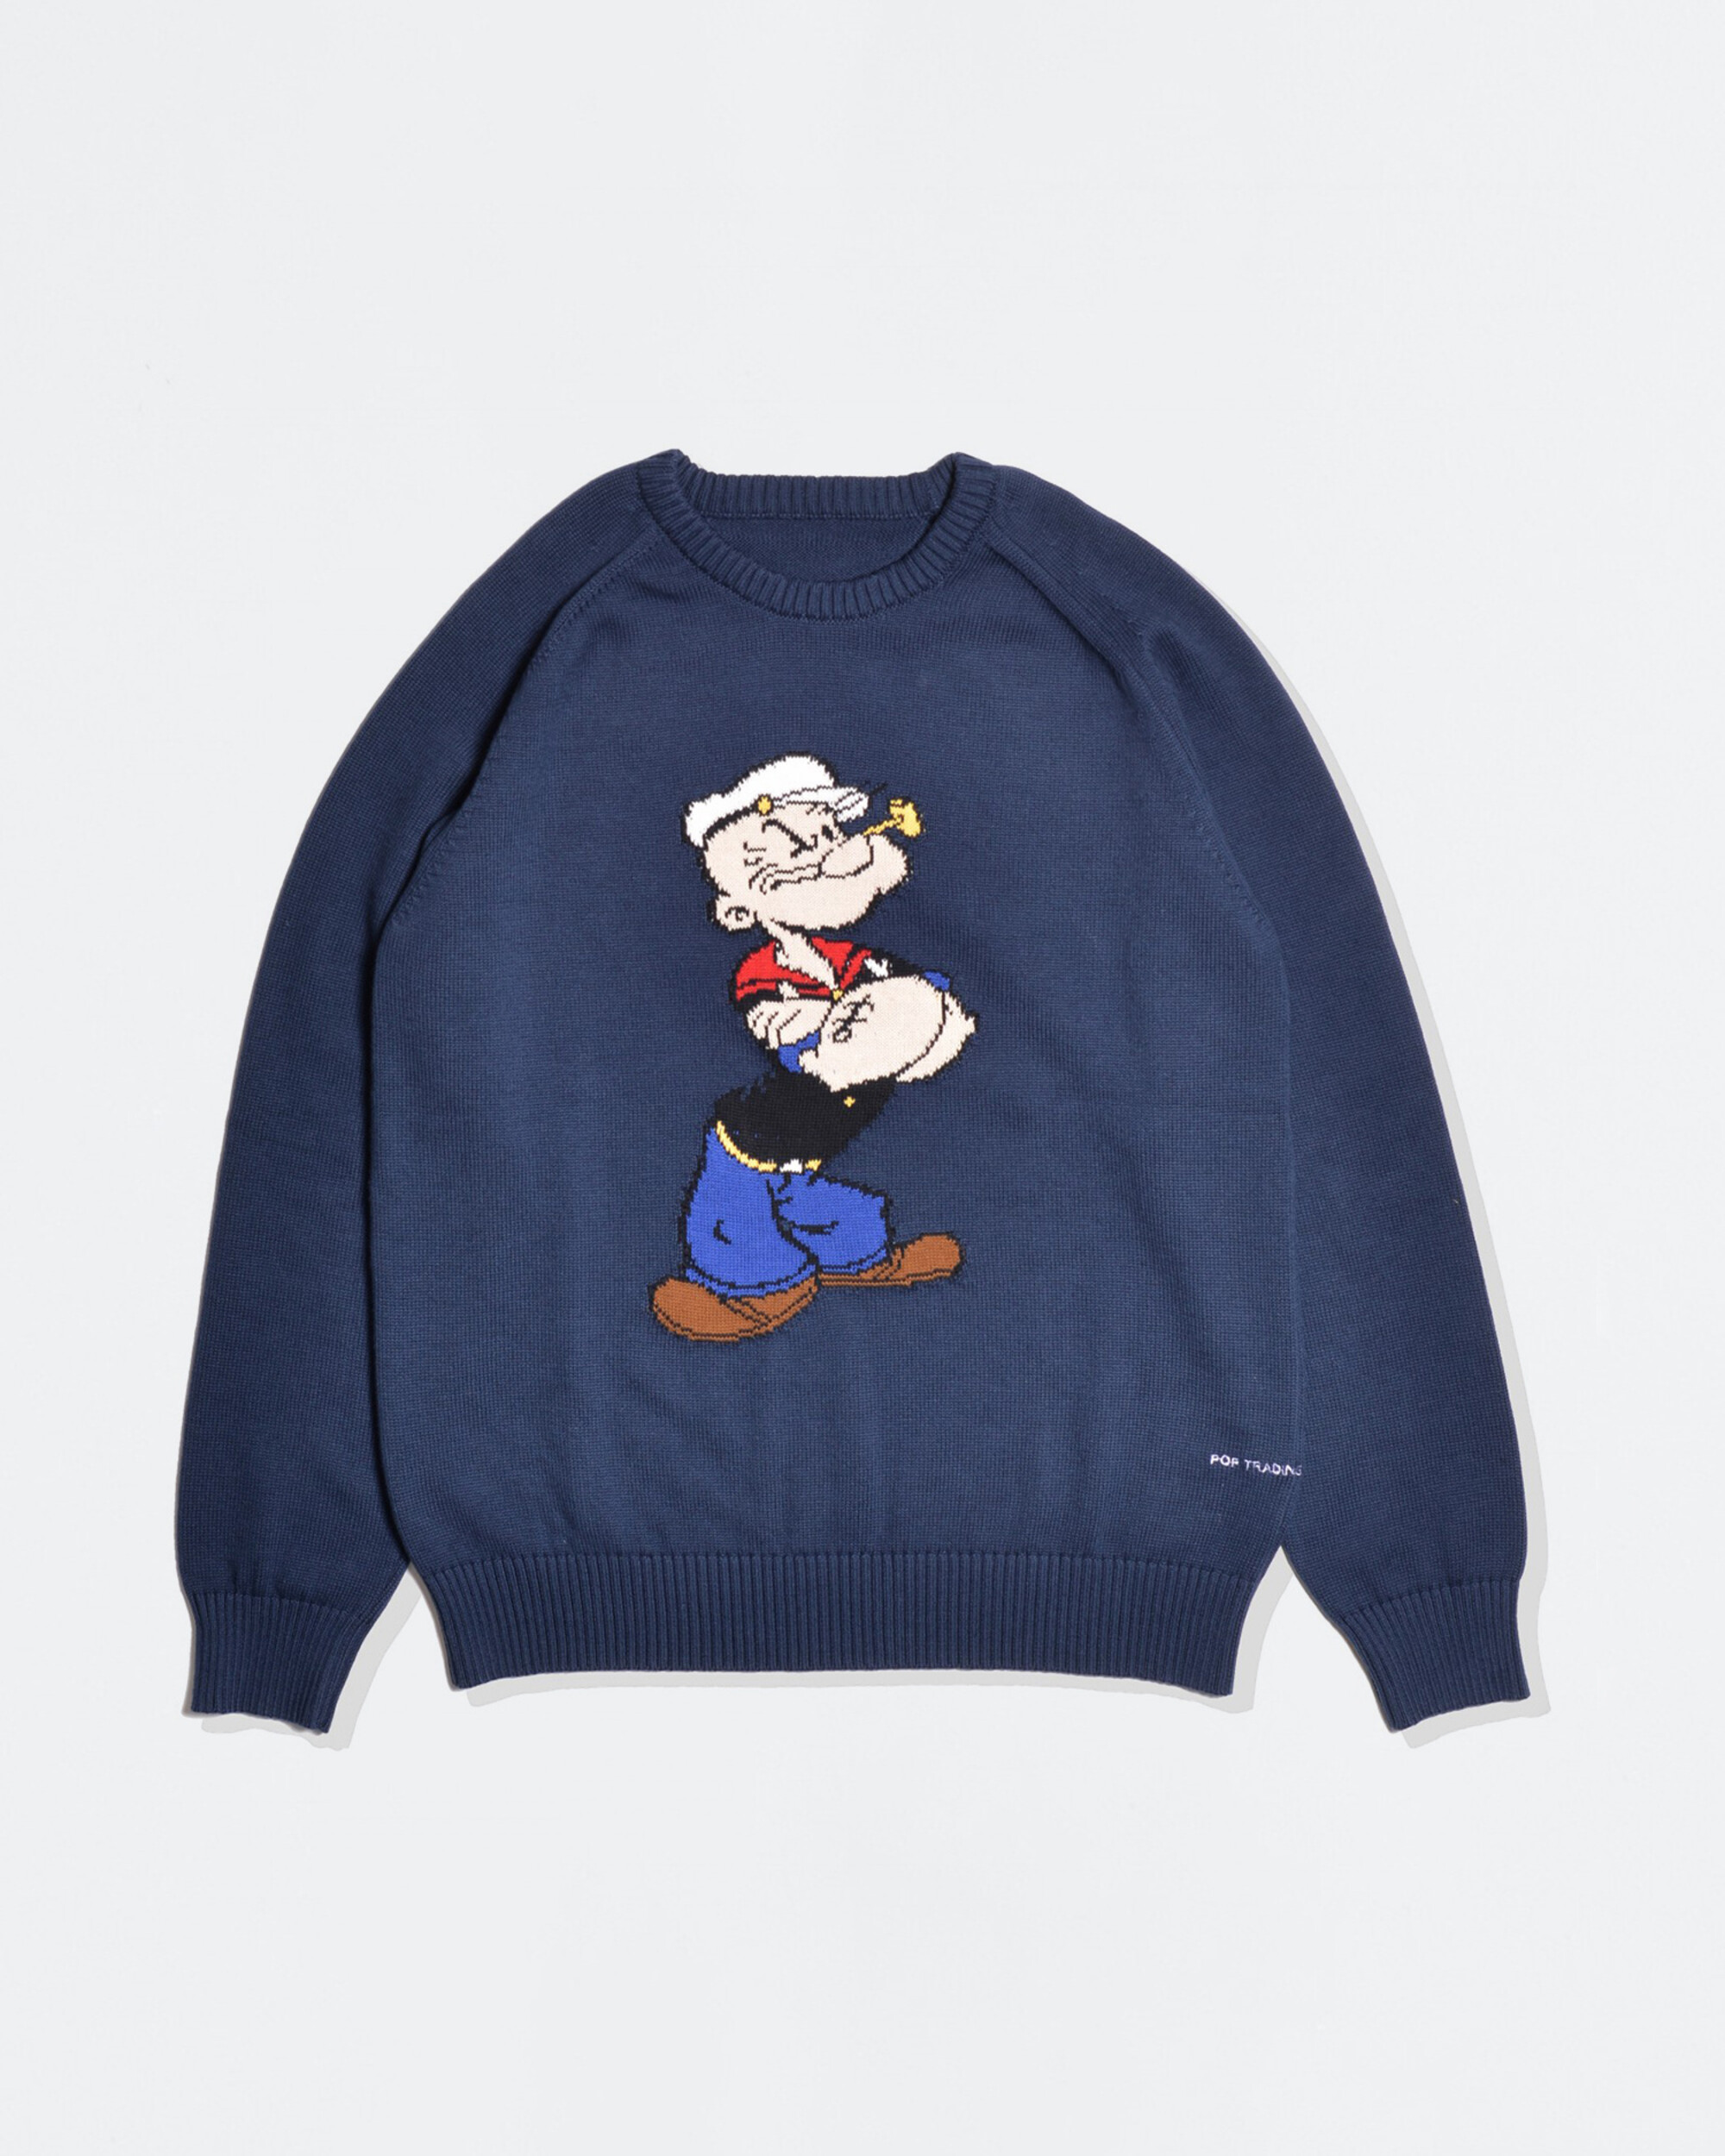 Pop Trading Co X Popeye knit navy